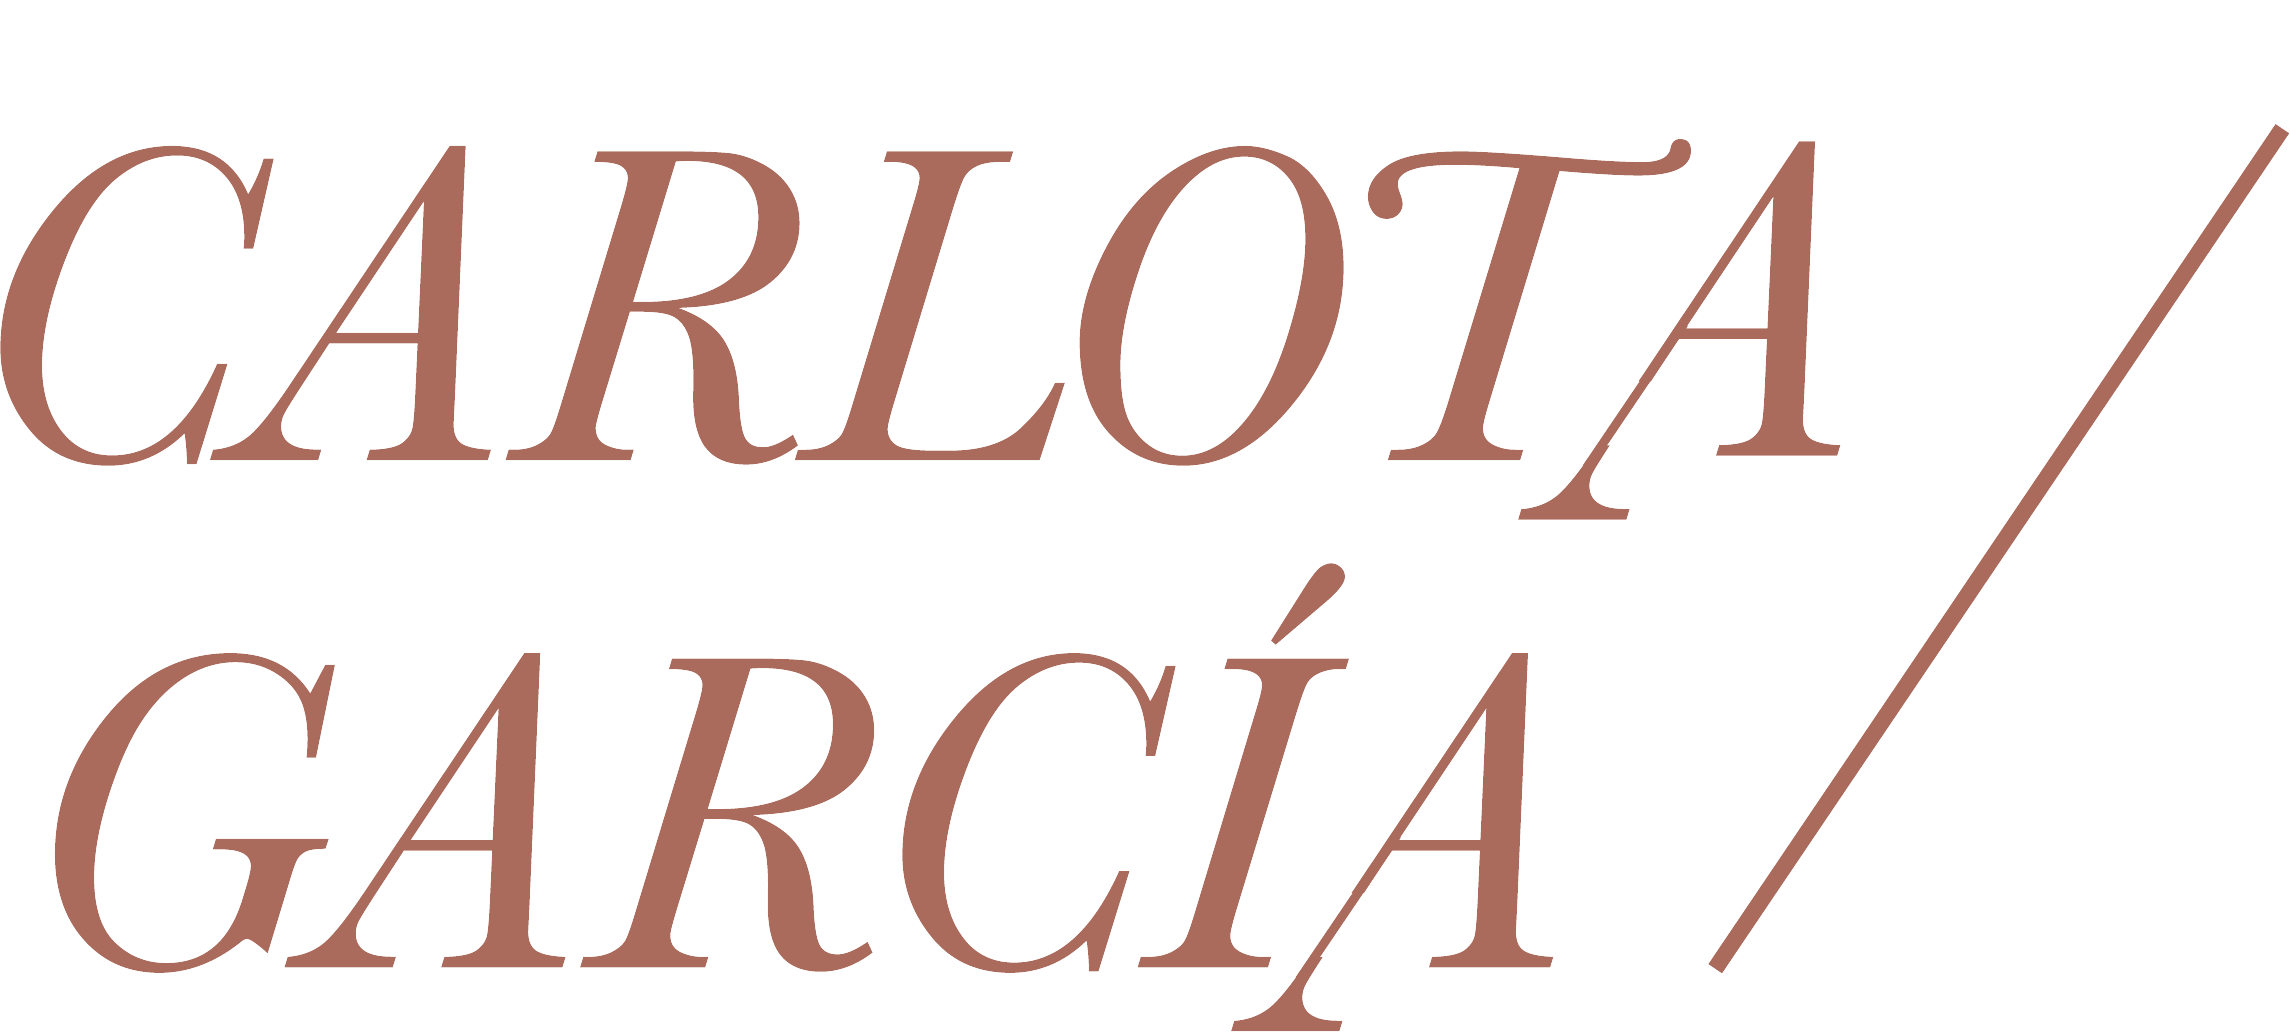 Carlota García Logo